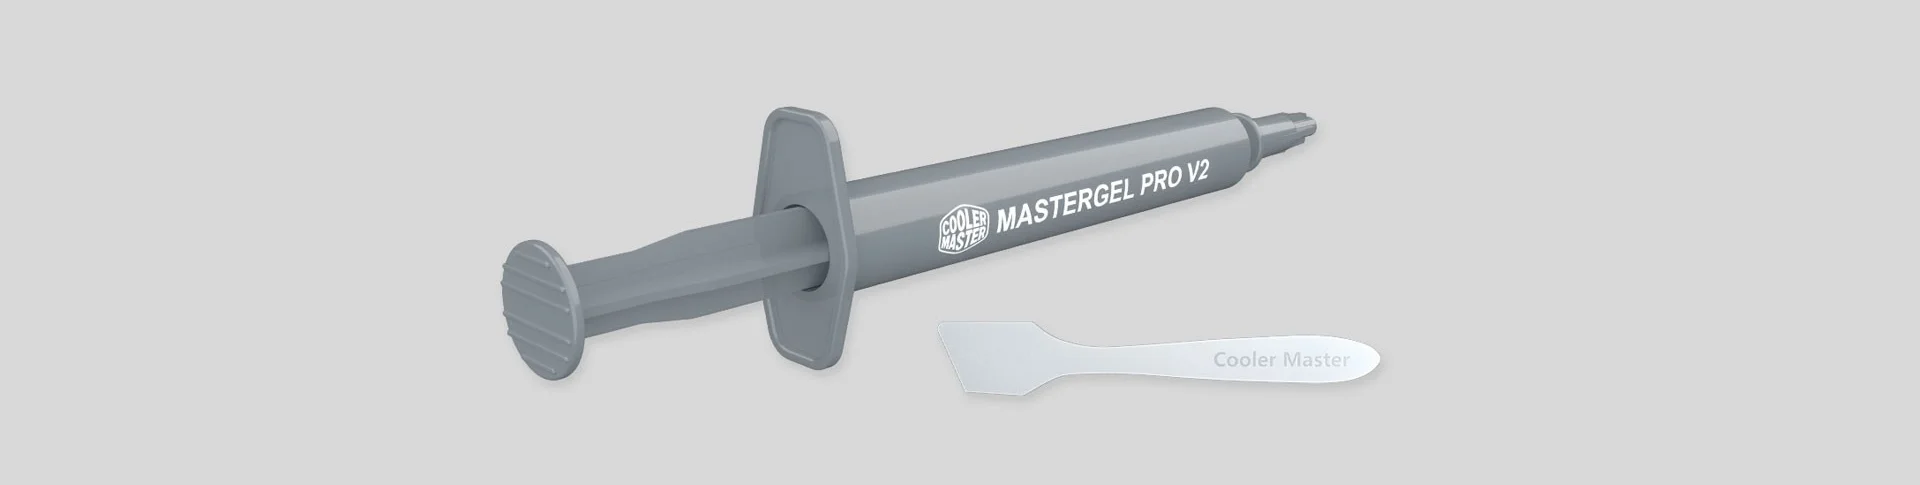 خمیر حرارتی کولر مستر Coolermaster Mastergel Pro V2